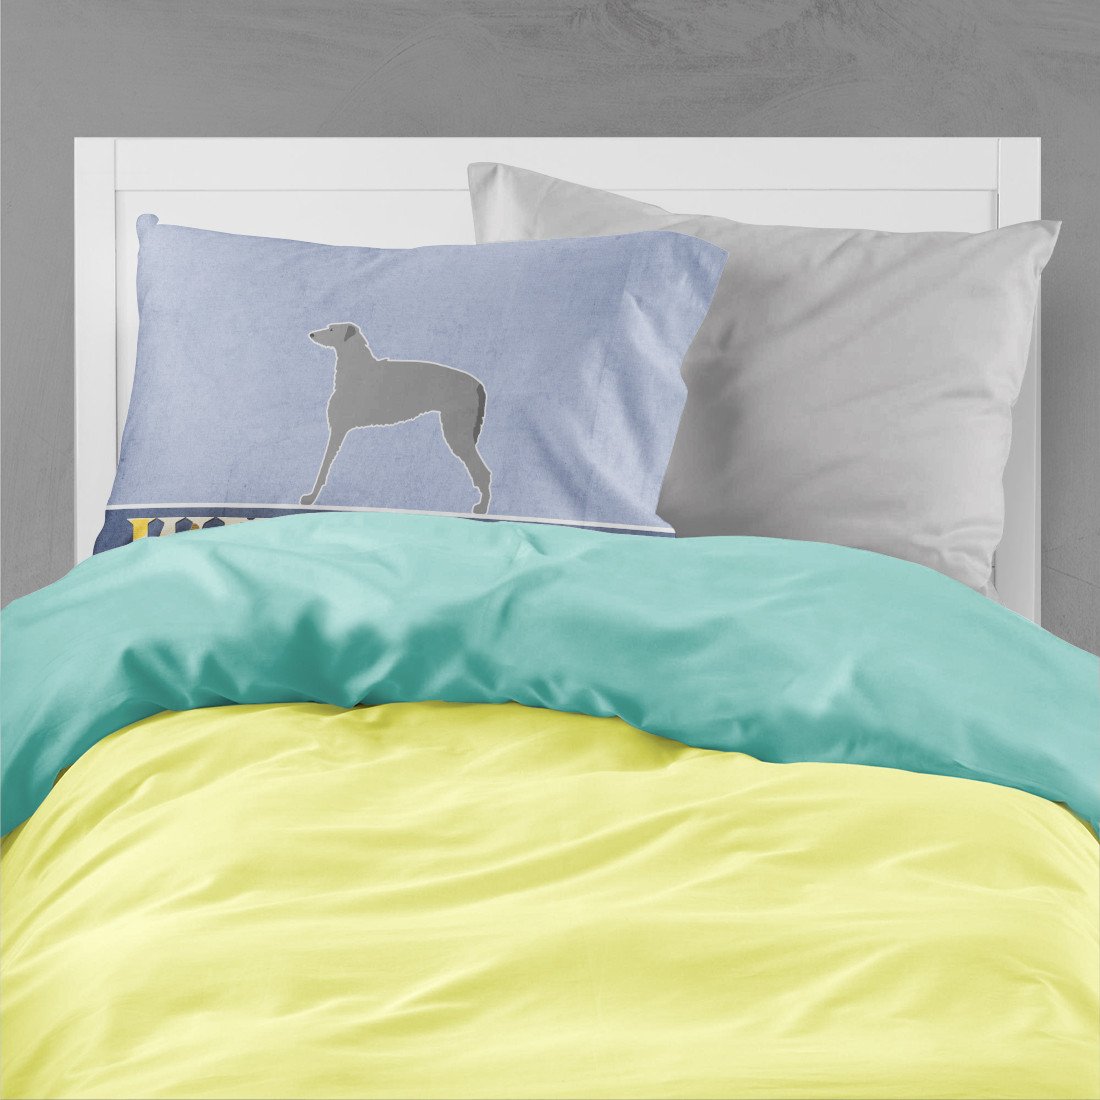 Scottish Deerhound Welcome Fabric Standard Pillowcase BB5500PILLOWCASE by Caroline's Treasures